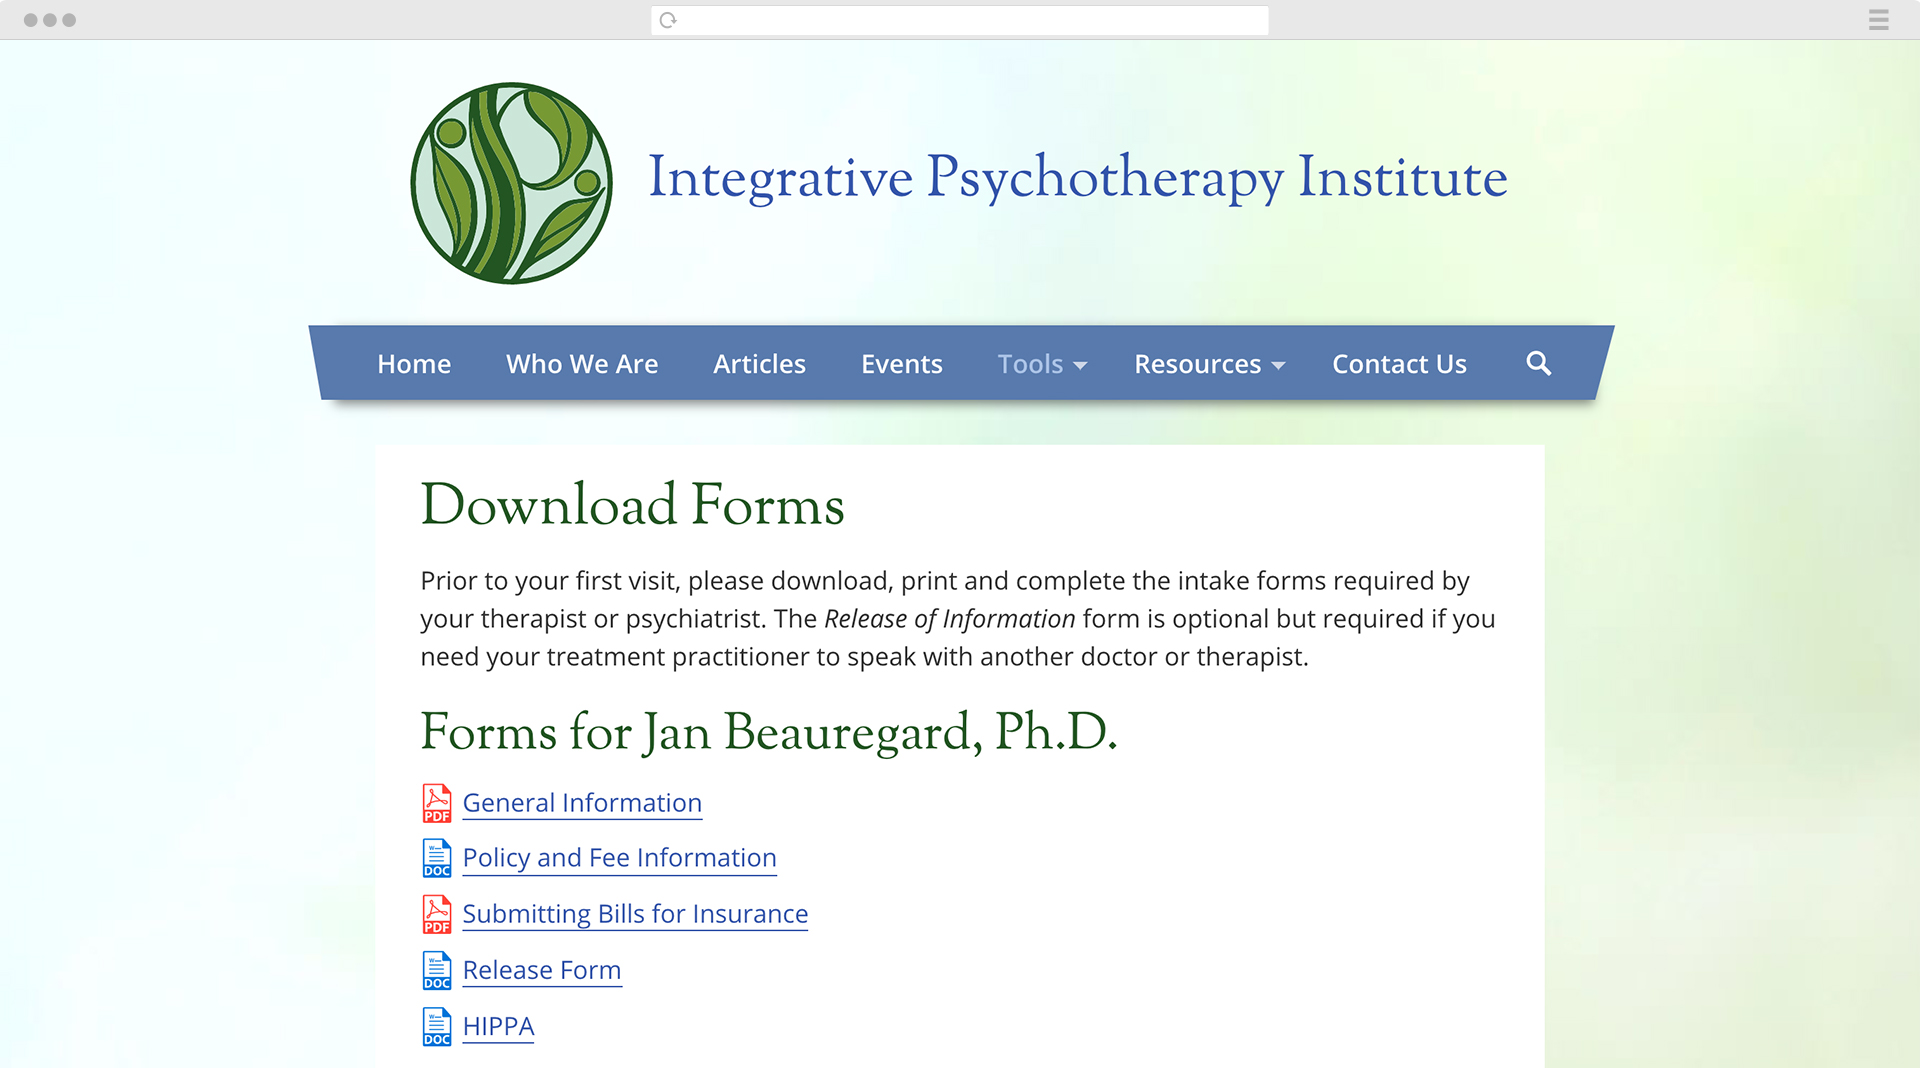 Integrative Psychotherapy Institute website